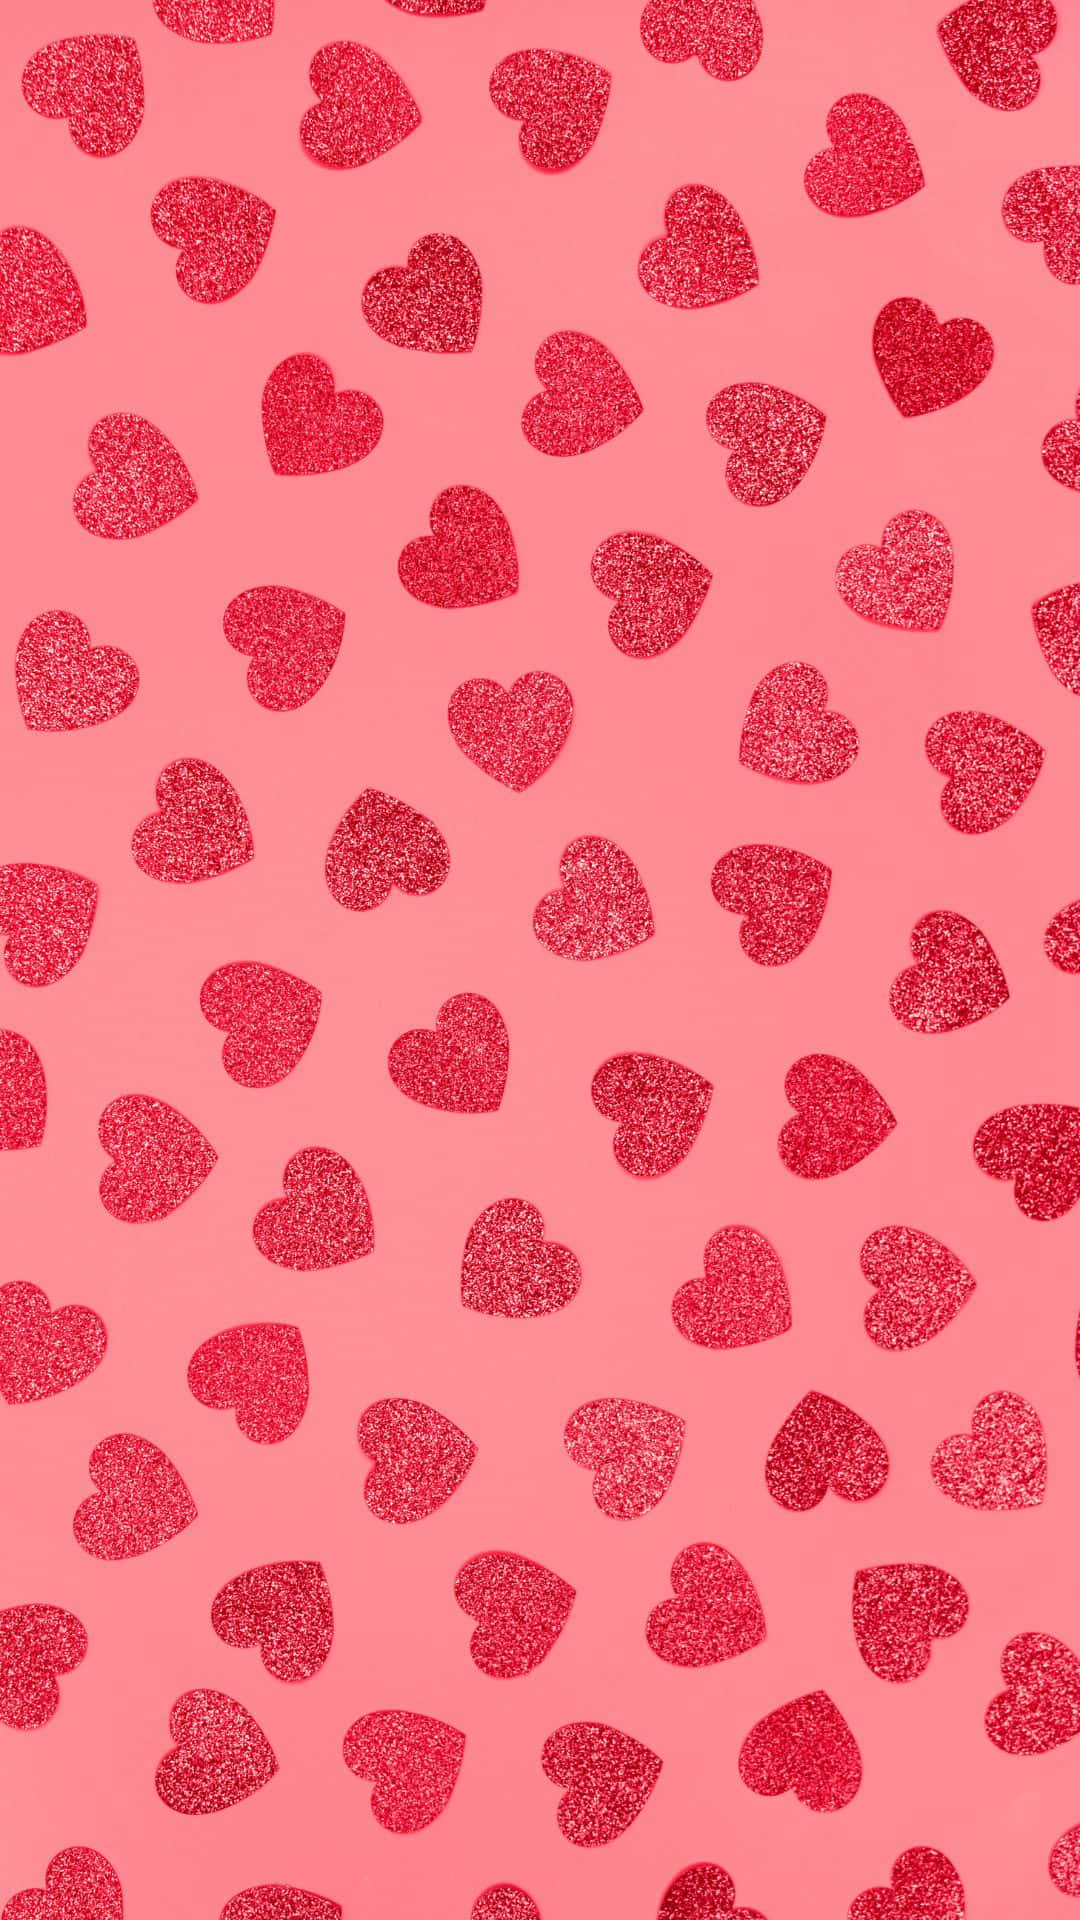 Cute Hearts Aesthetic Vsco Pattern Background